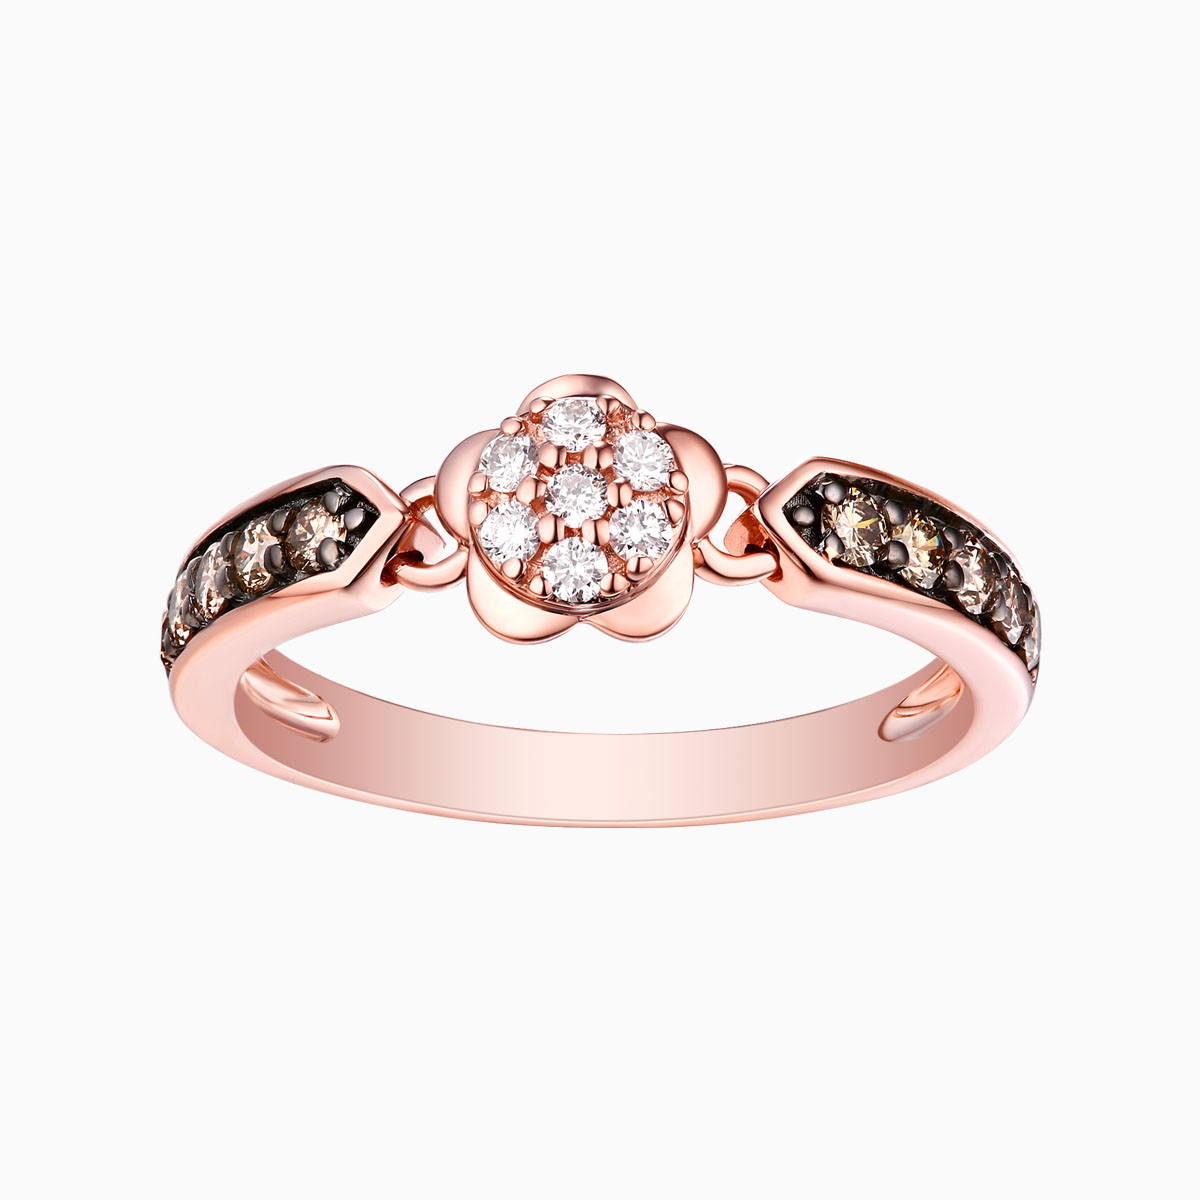 R24980WBR- 14K Rose Gold Diamond Ring, 0.43 TCW